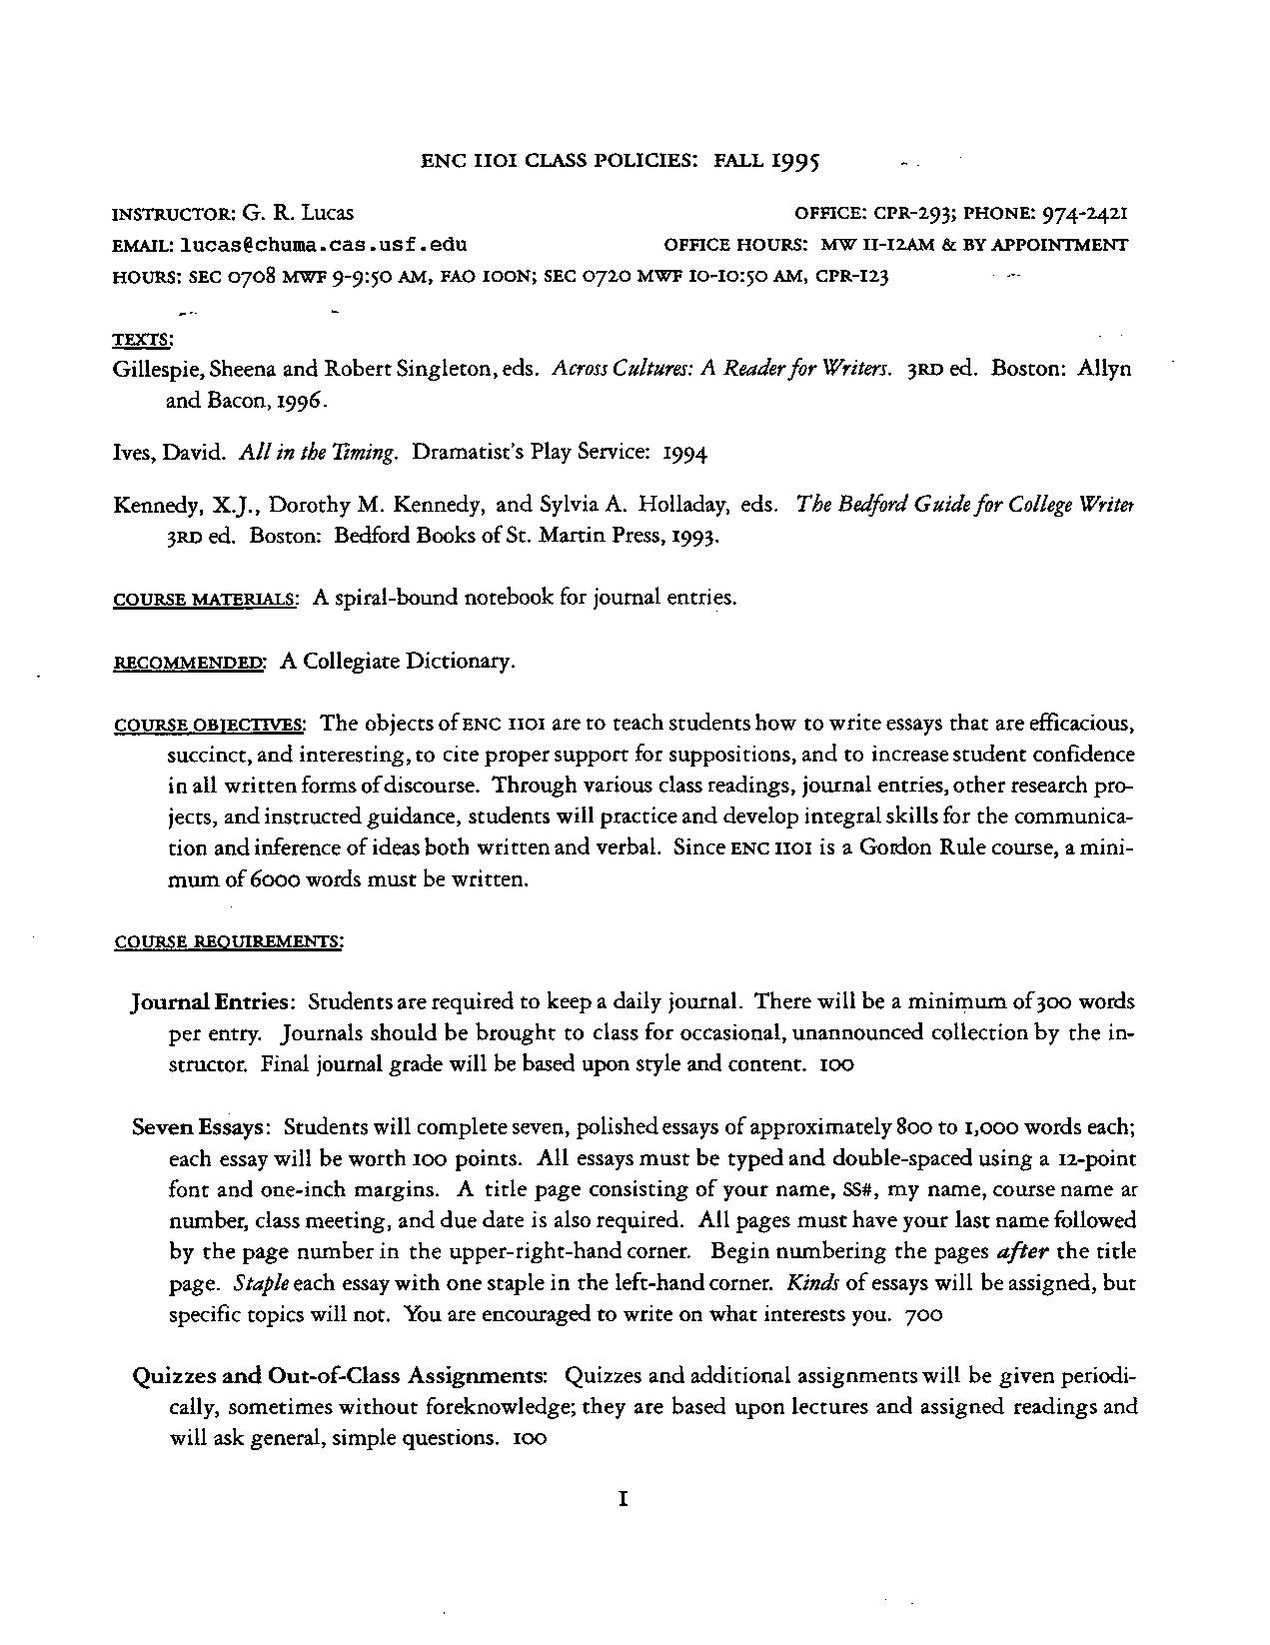 ENC 1101 F95 Syllabus.pdf